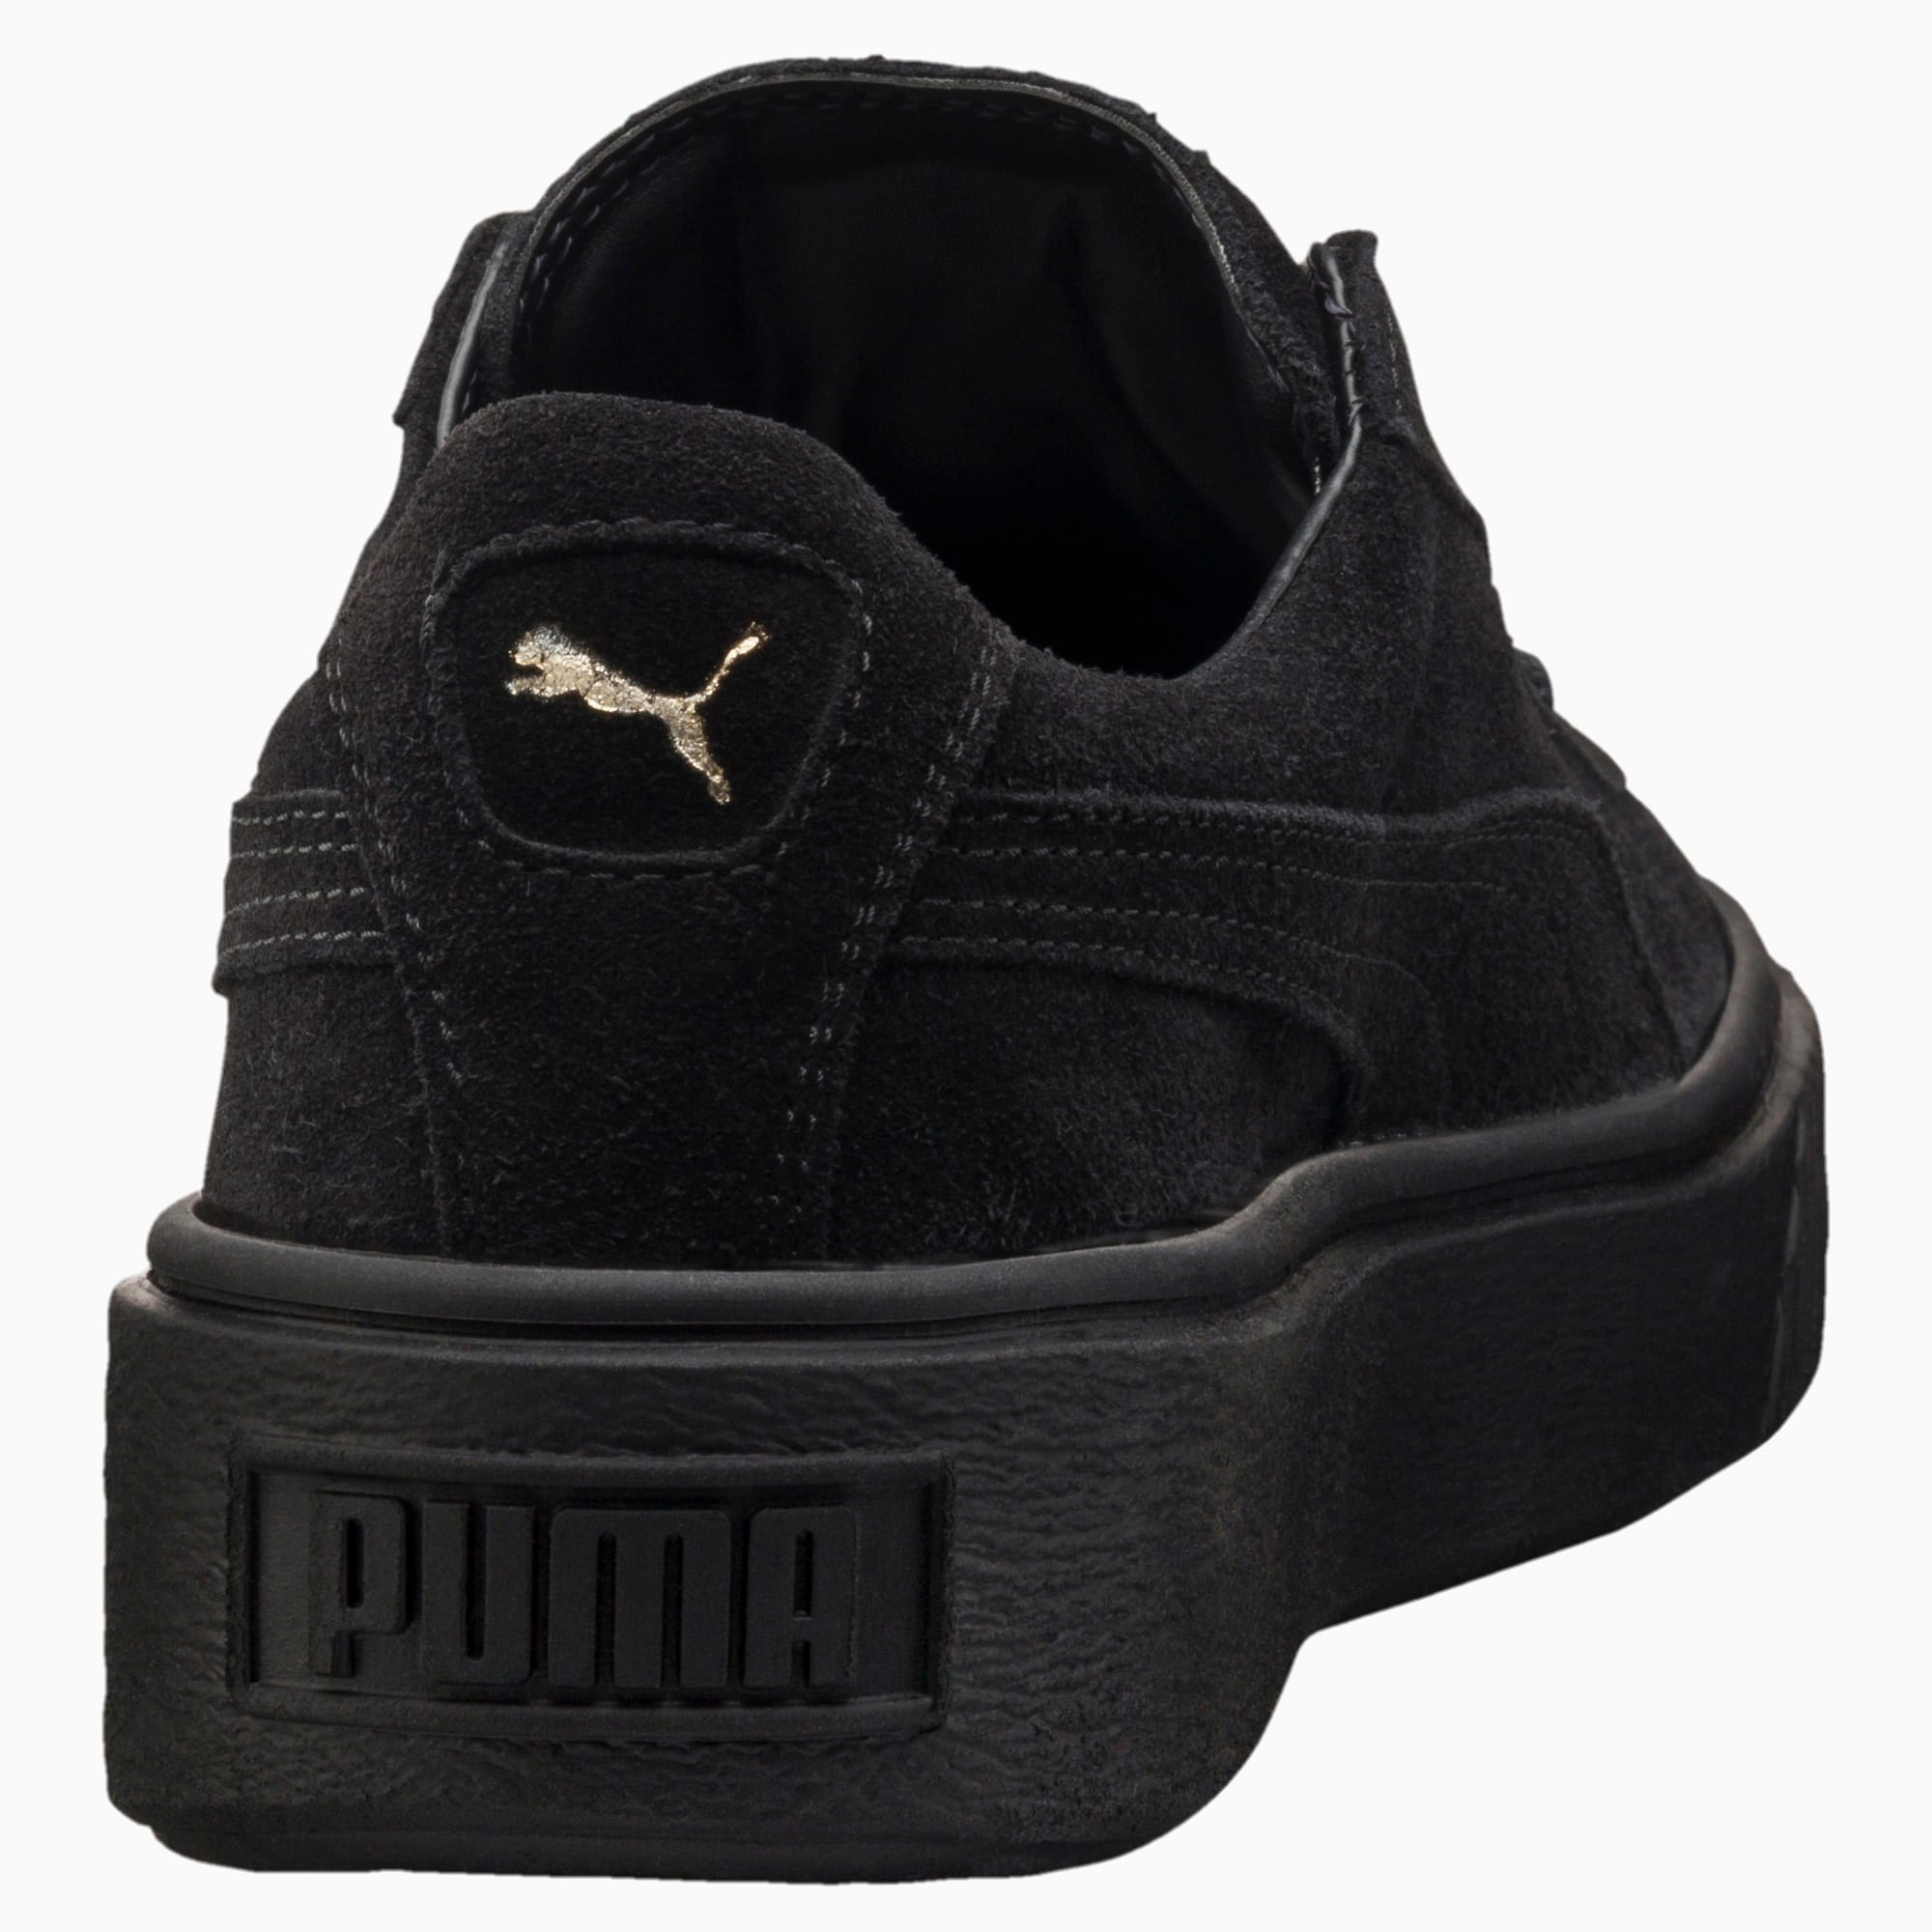 all black puma platform